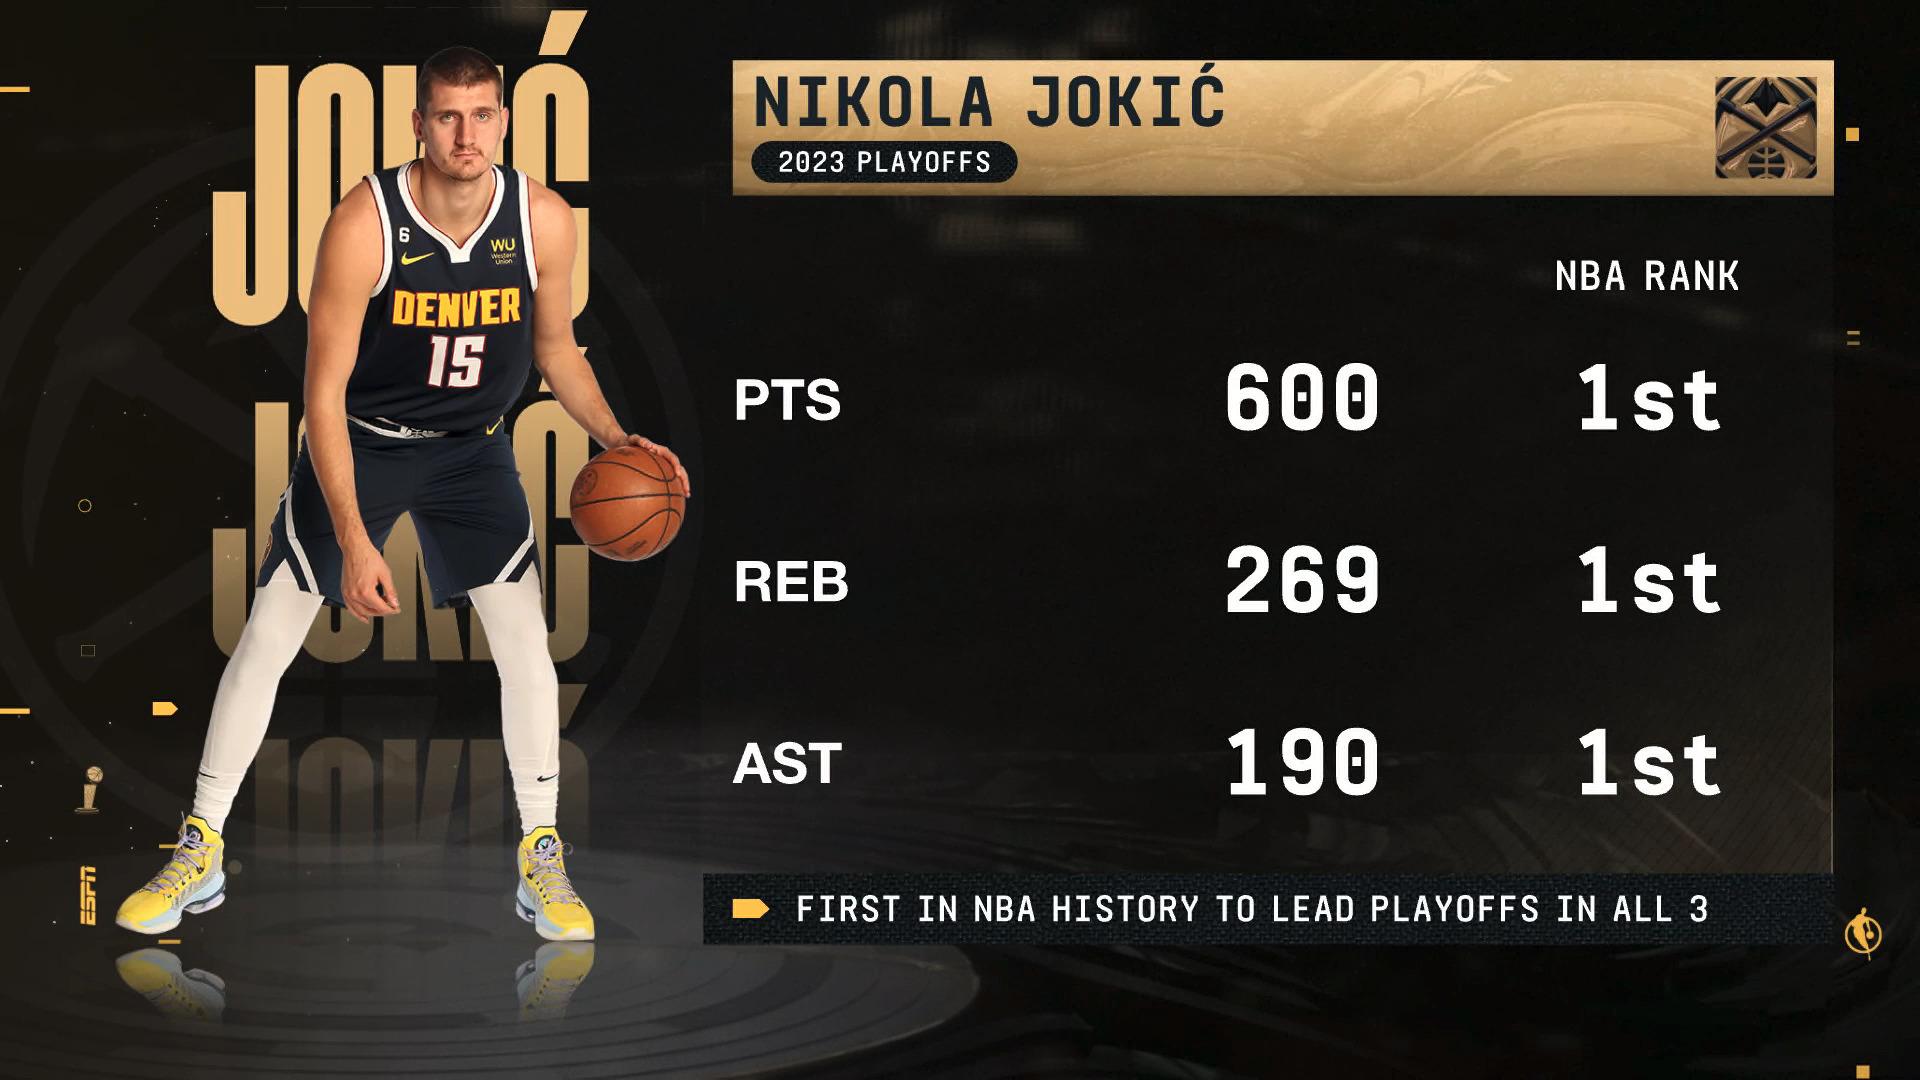 Nikola Jokic Finales NBA 2023 stats